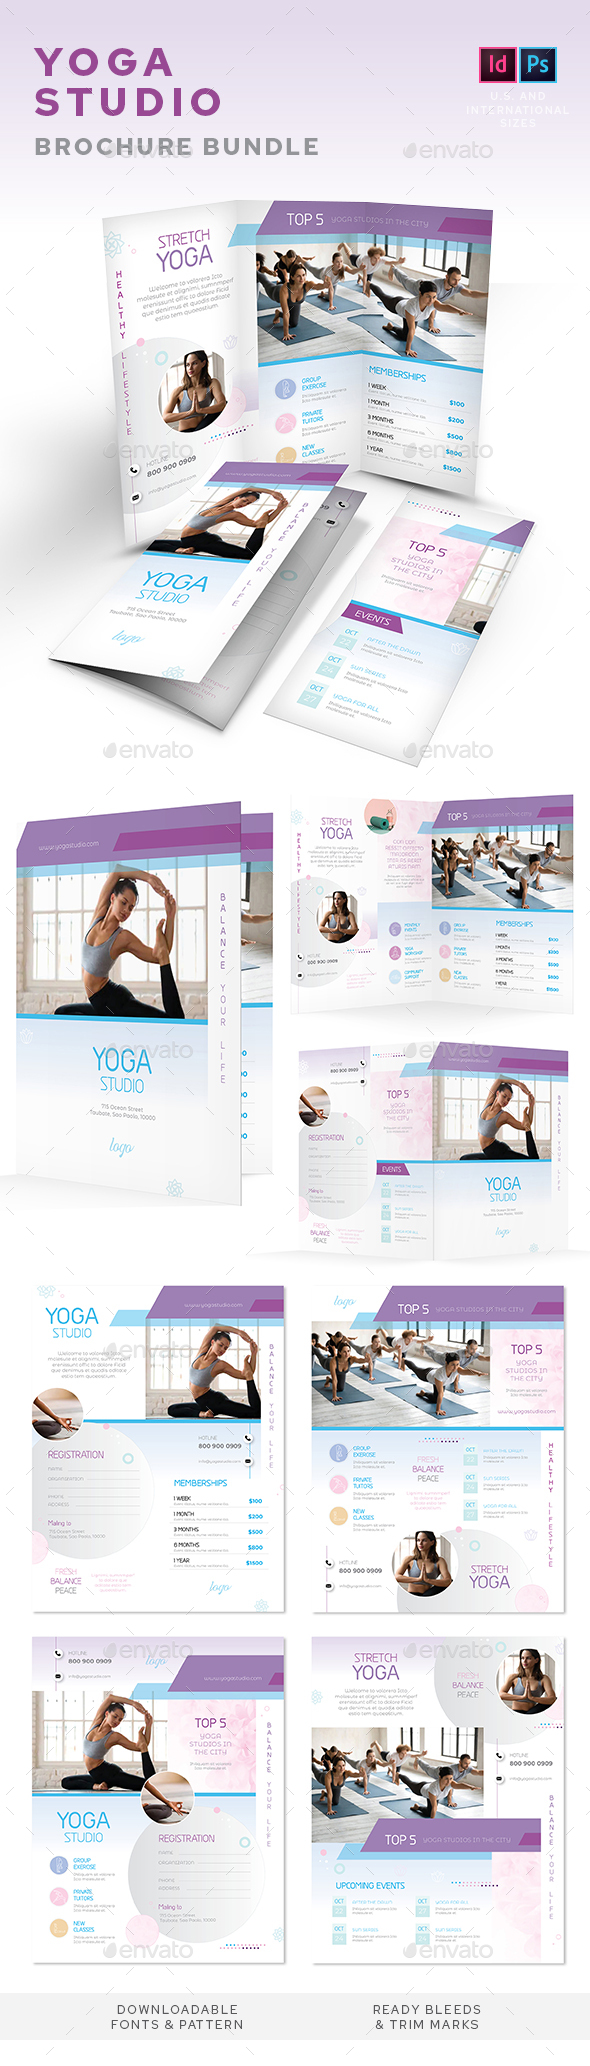 [DOWNLOAD]Yoga Studio Print Bundle